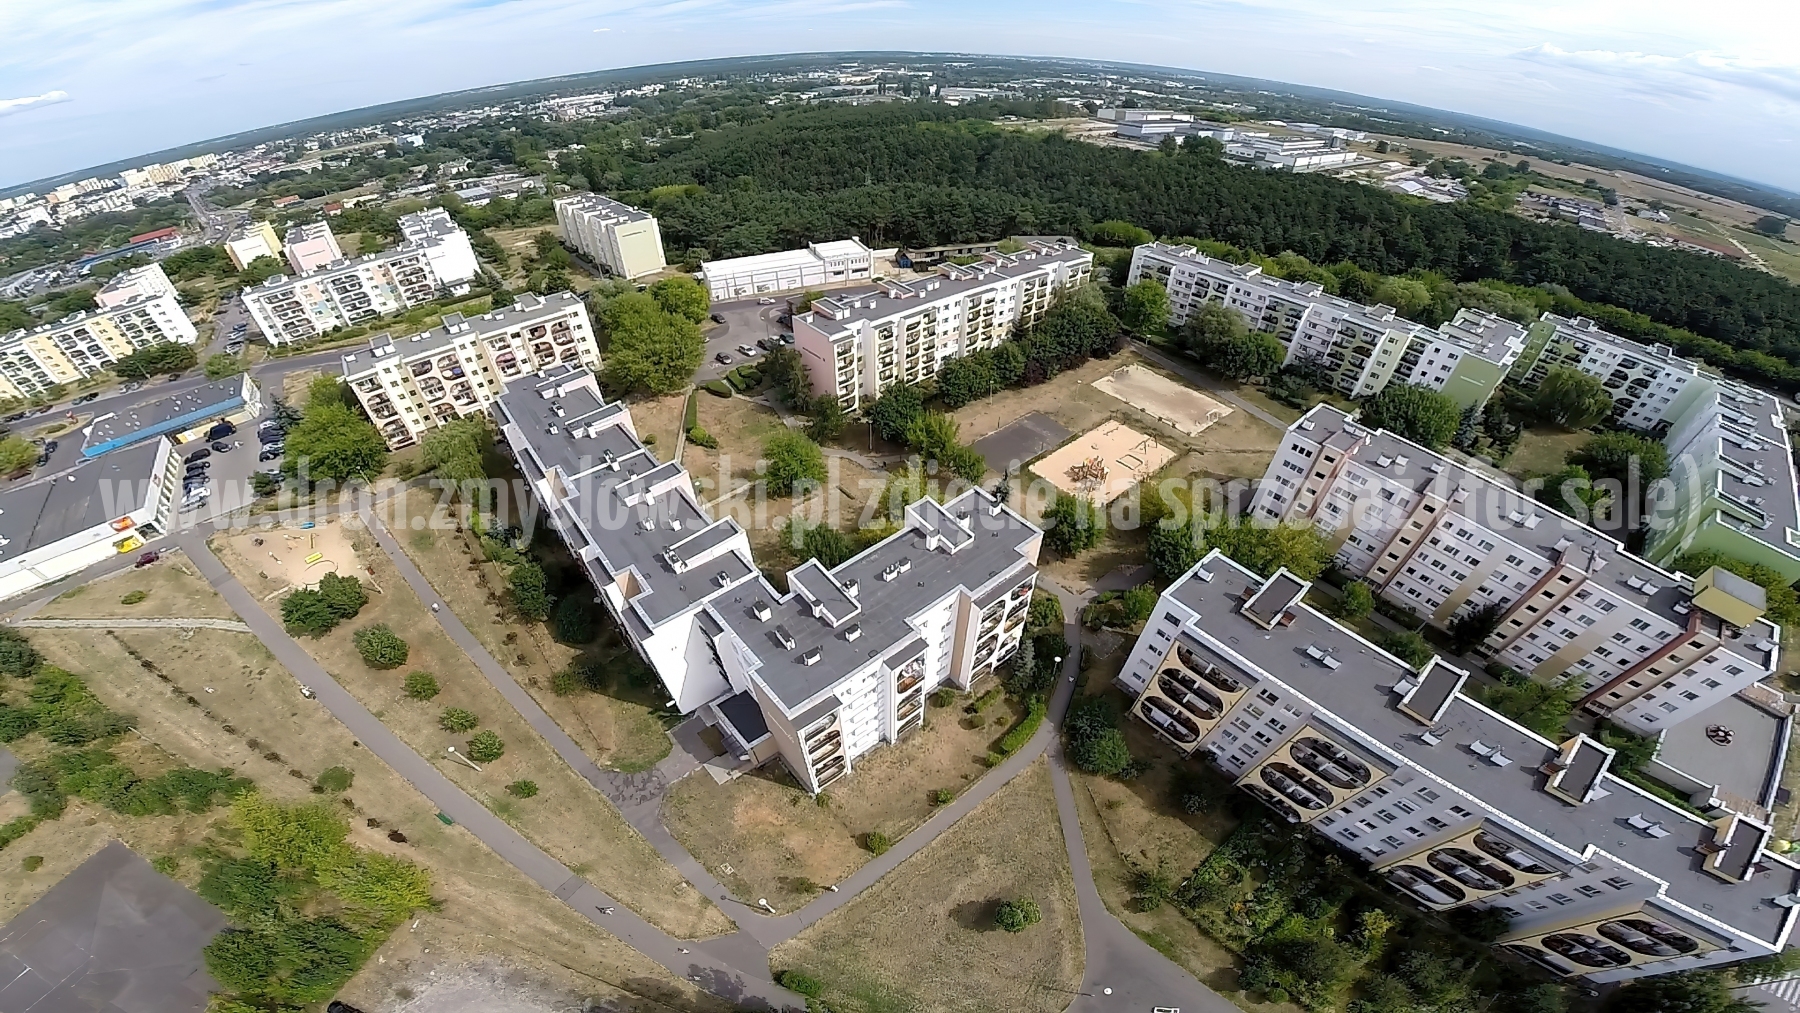 2014-08-01-dron-na-Sandomierskiej-004-gigapixel-standard-width-3840px-SharpenAI-Focus